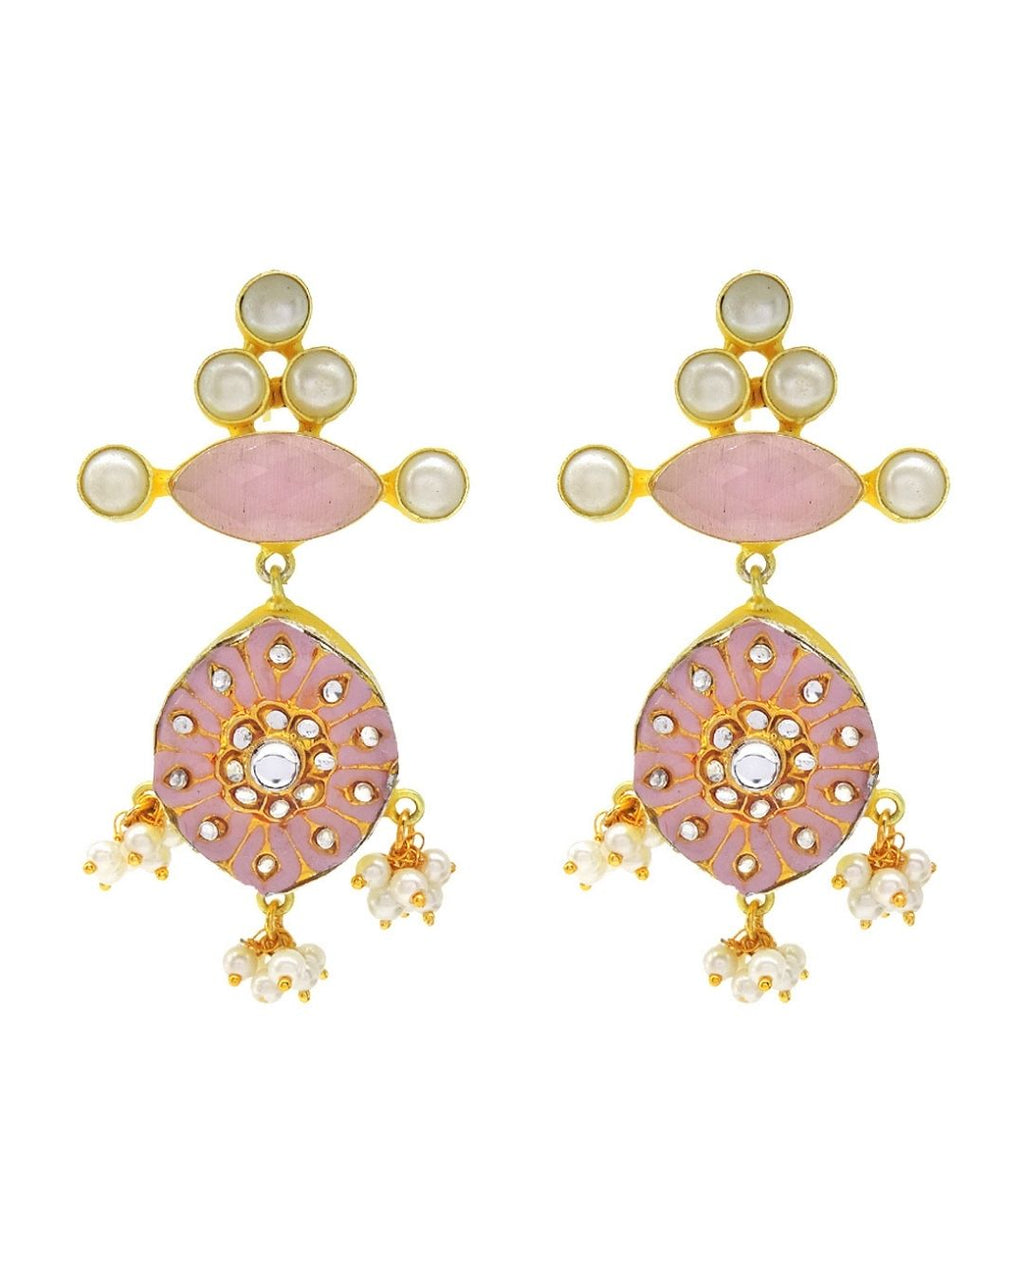 Miriam Earrings - Earrings - Handcrafted Jewellery - Made in India - Dubai Jewellery, Fashion & Lifestyle - Dori